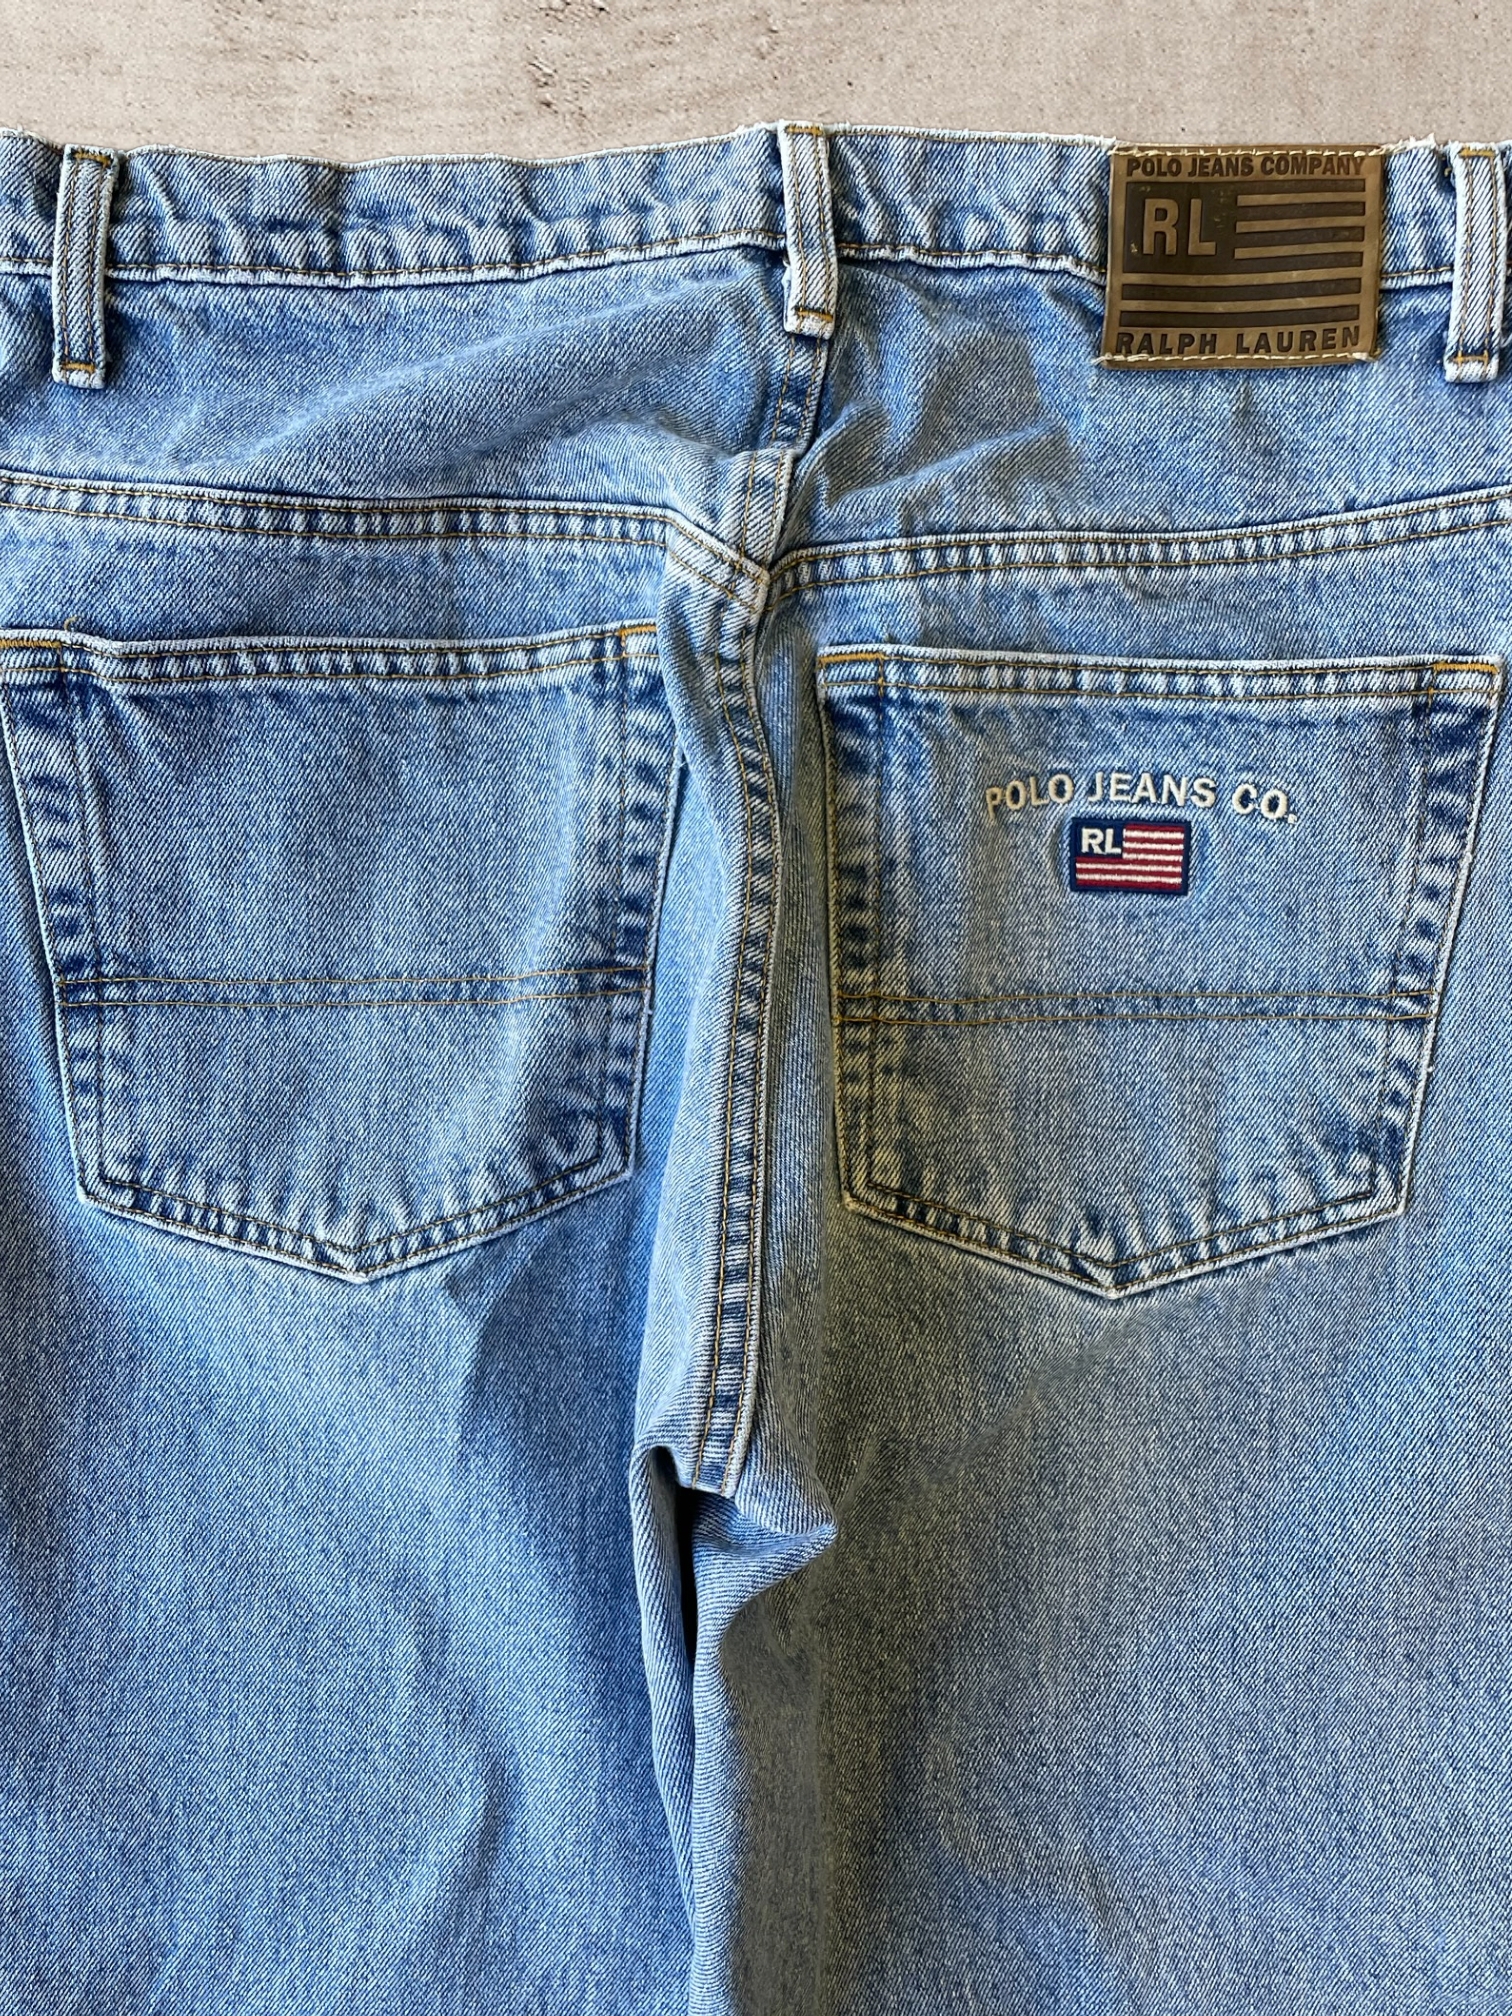 90s Polo Ralph Lauren Jeans - 32x33